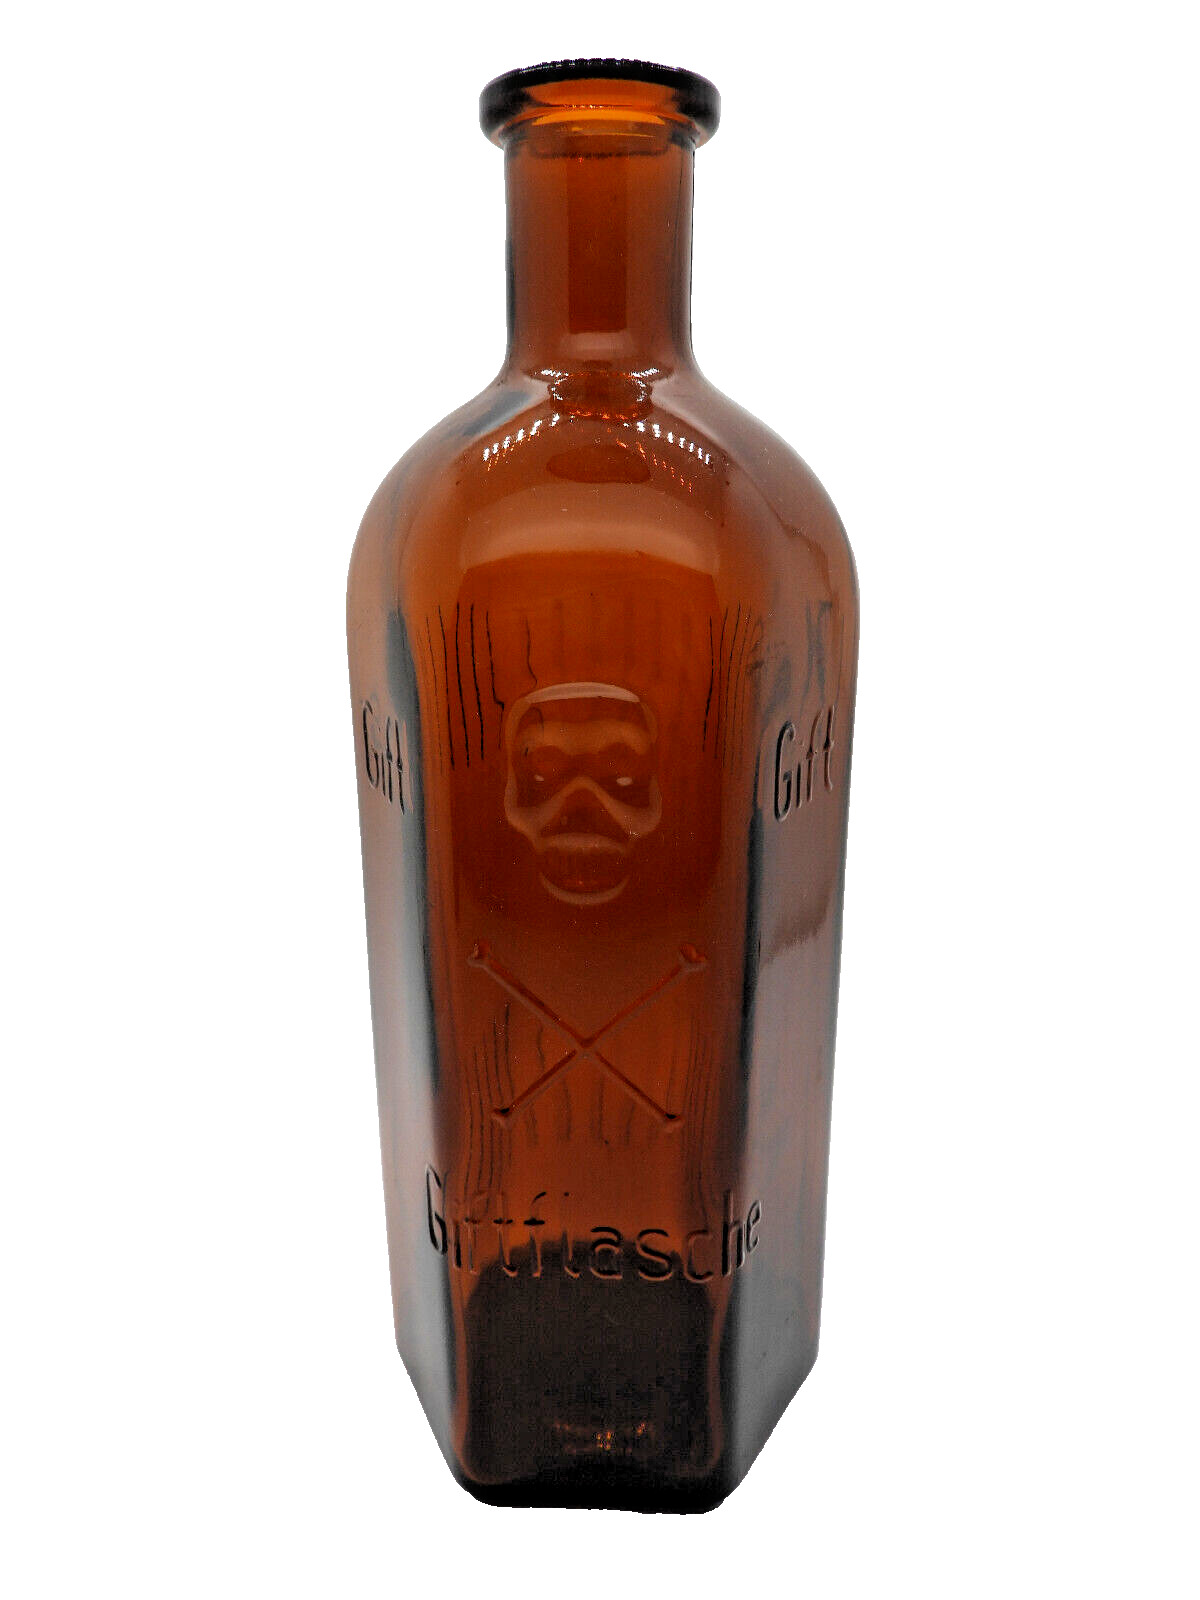 +ANTIQUE+ KH-18 Poison bottle 500ml / Giftflasche / one skull and crossbones